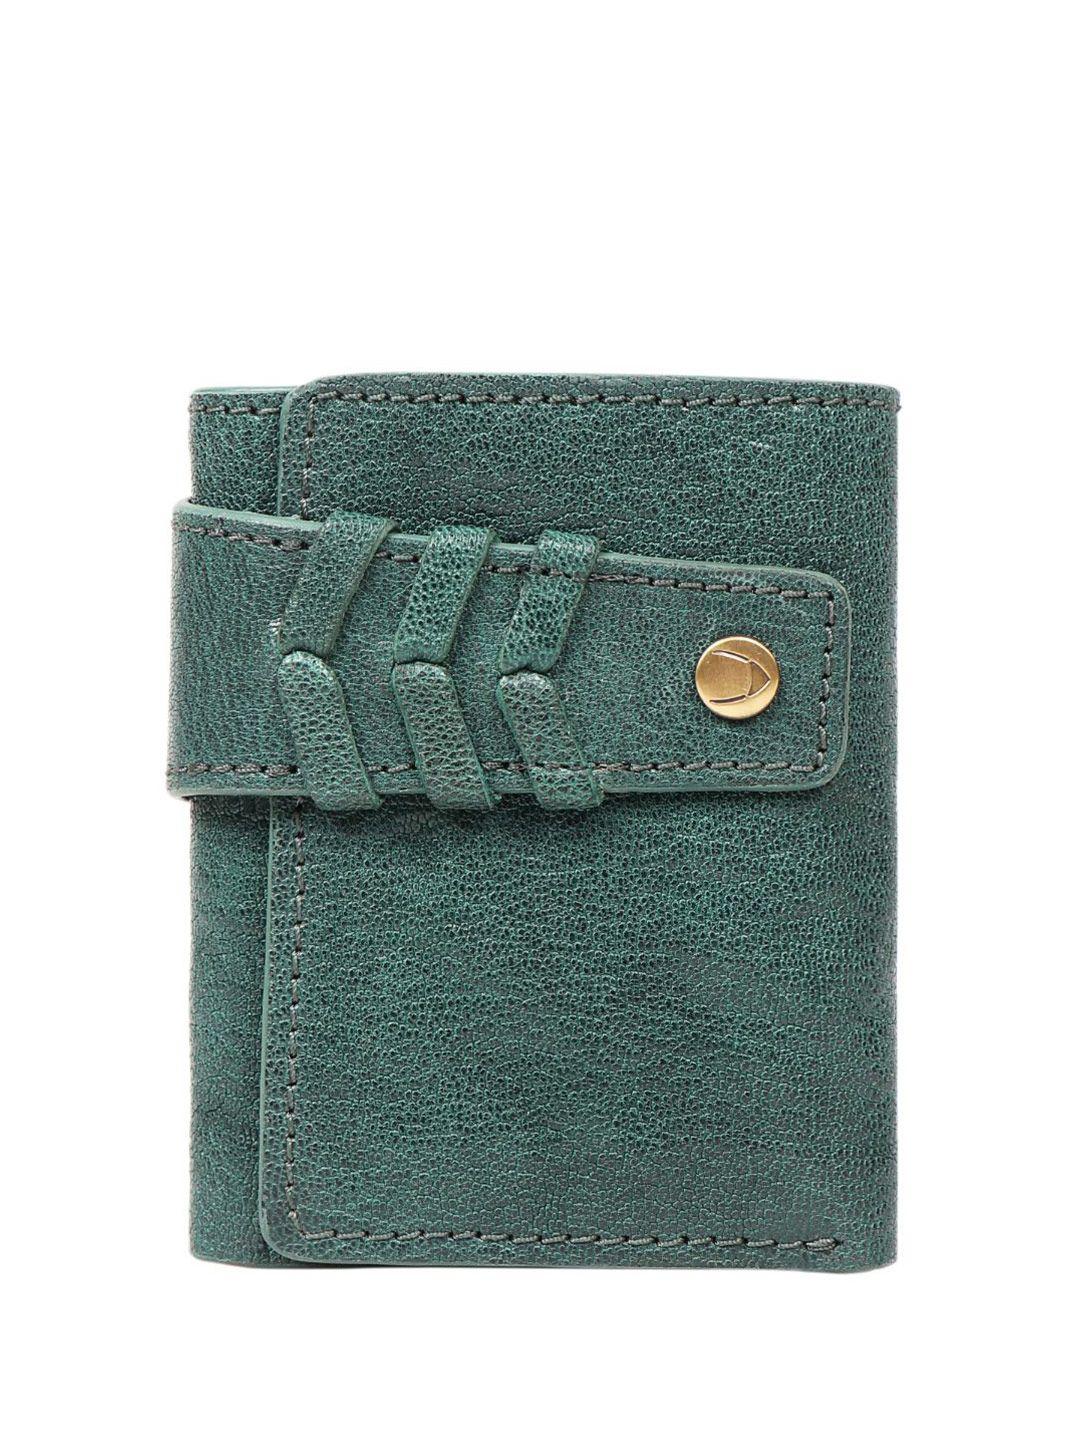 hidesign women textured leather three fold wallet